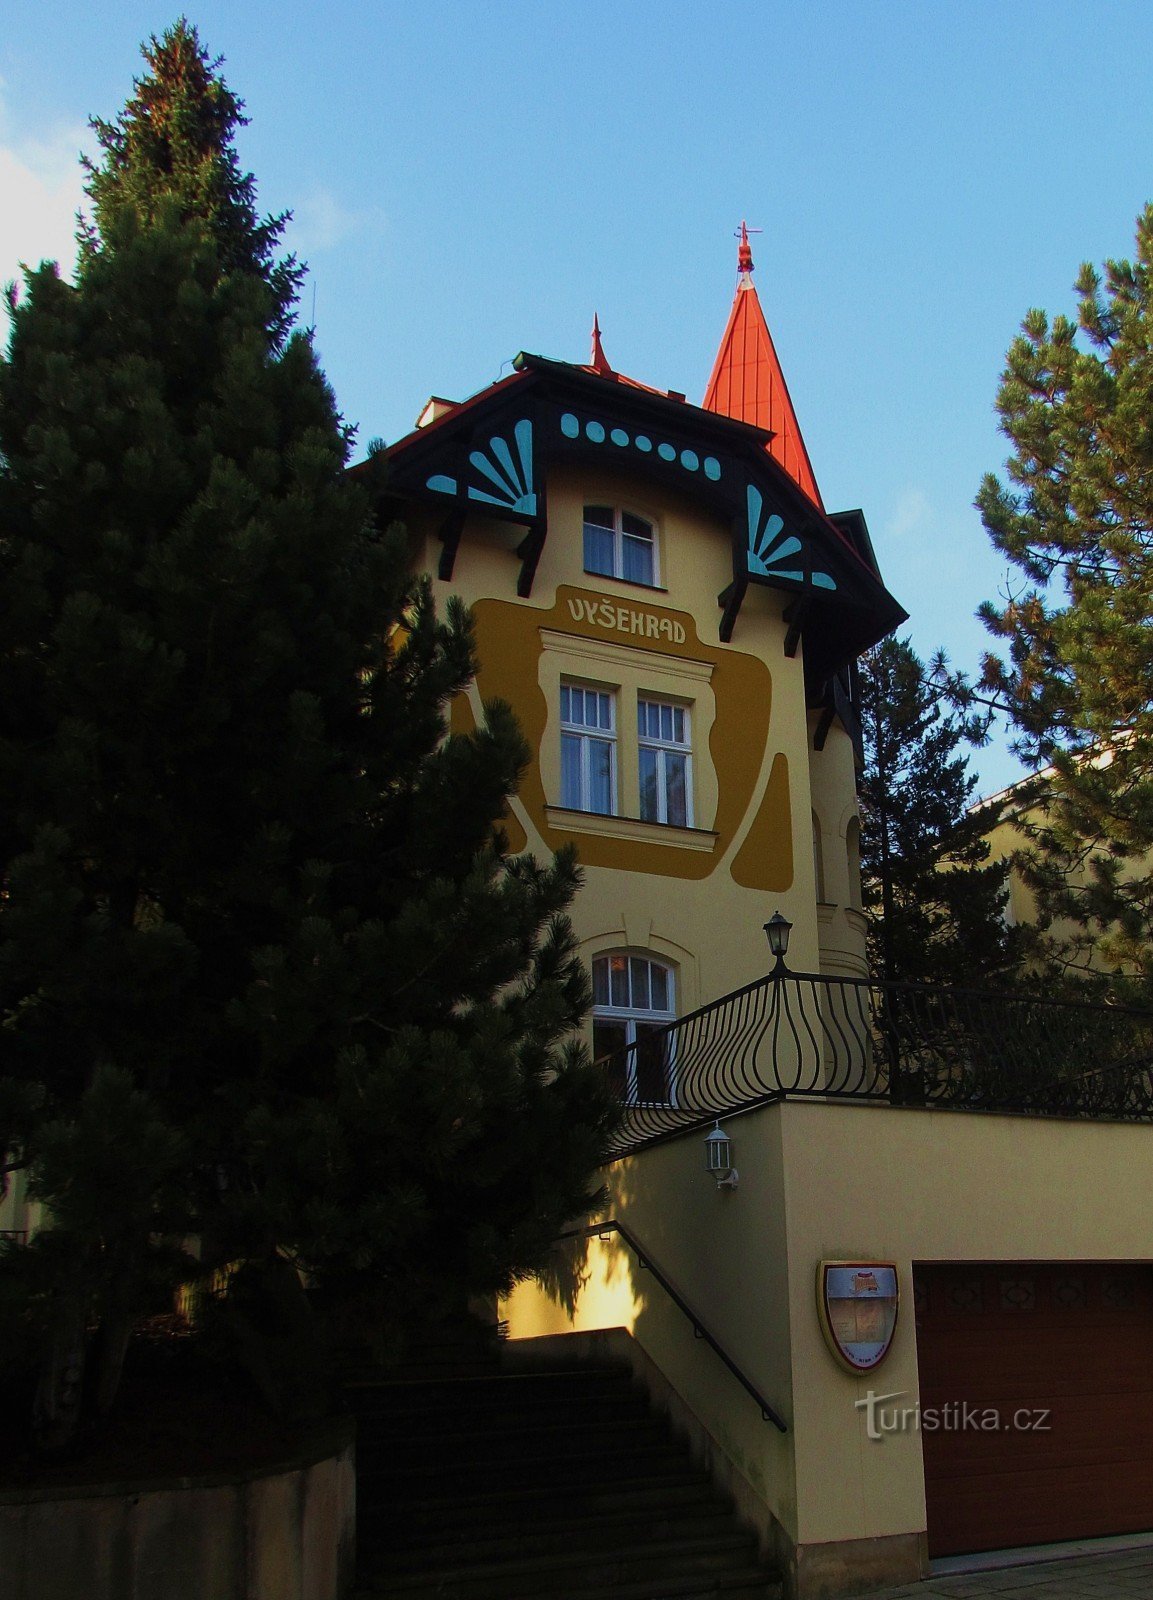 Hotel Vyšehrad i Luhačovice